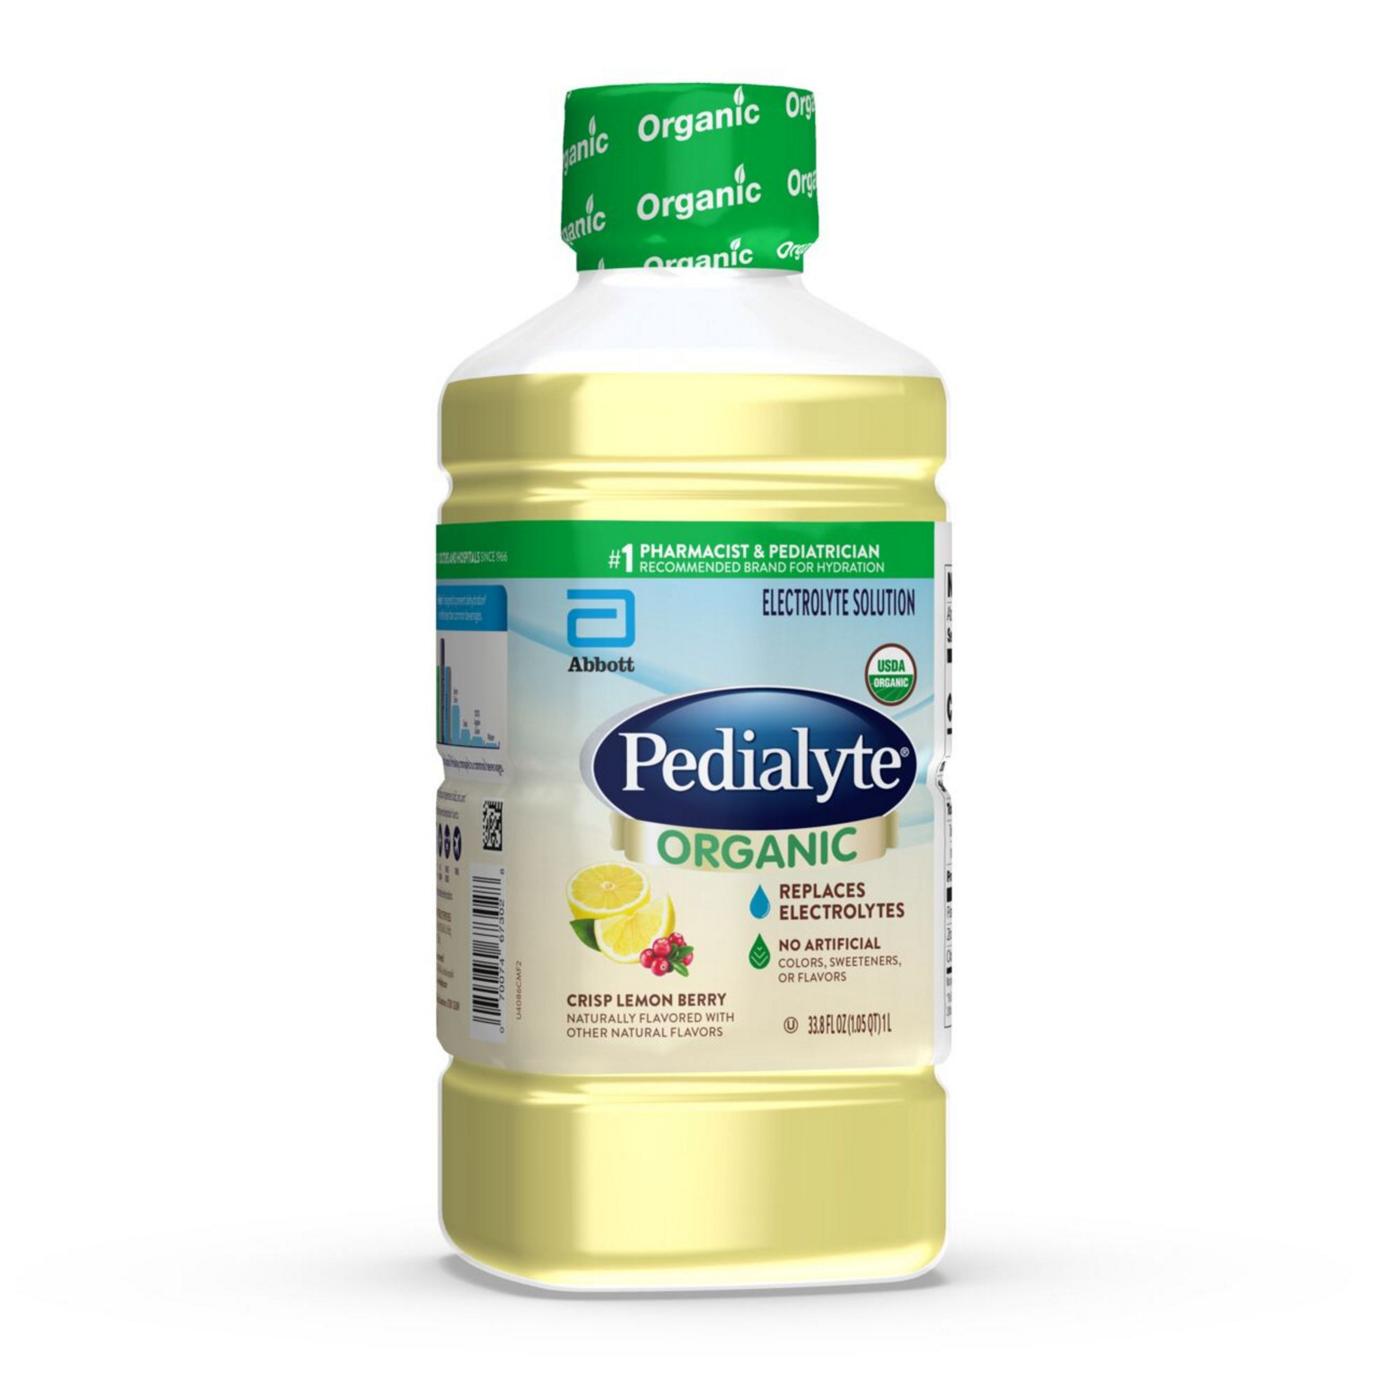 Pedialyte Organic Electrolyte Solution - Crisp Lemon Berry; image 3 of 9